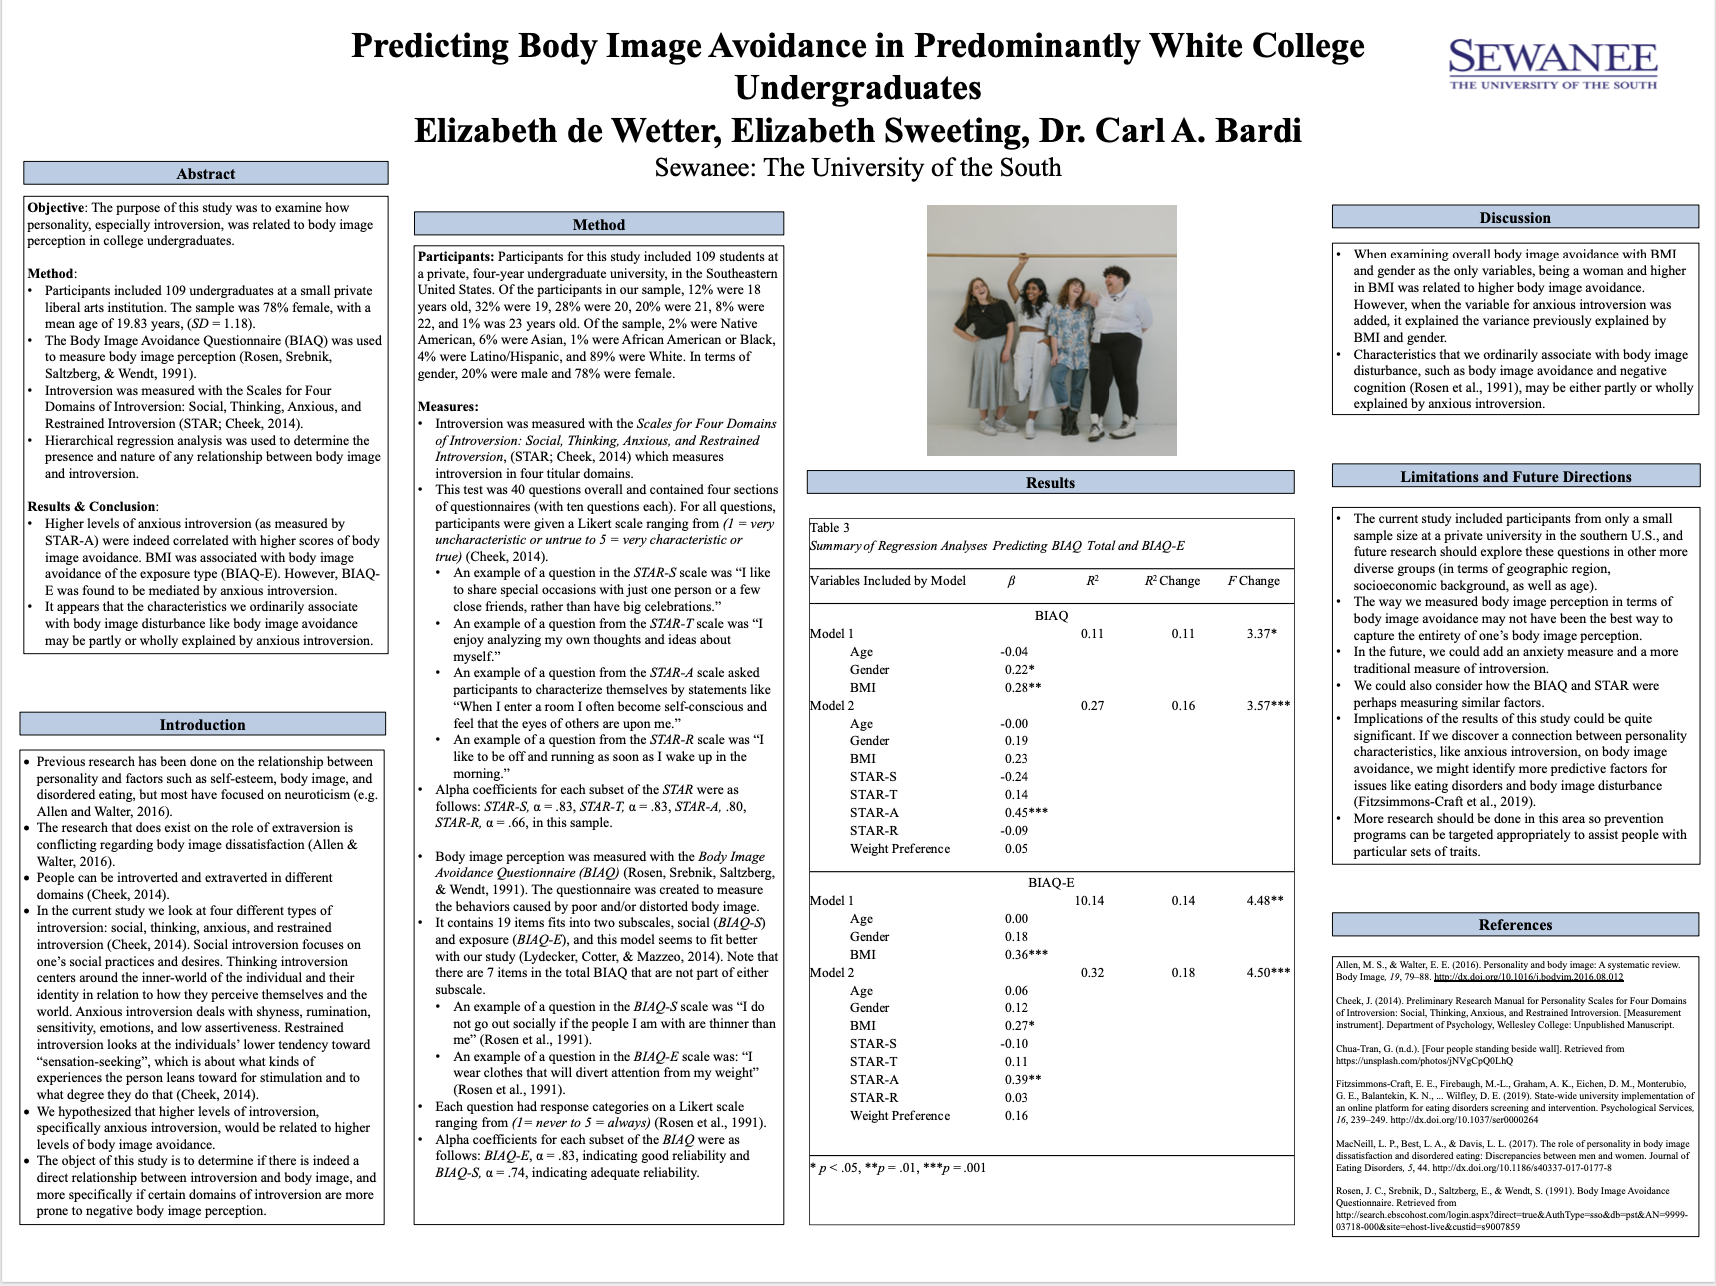 Showcase Image for Predicting Body Image Avoidance in Predominantly White College Undergraduates